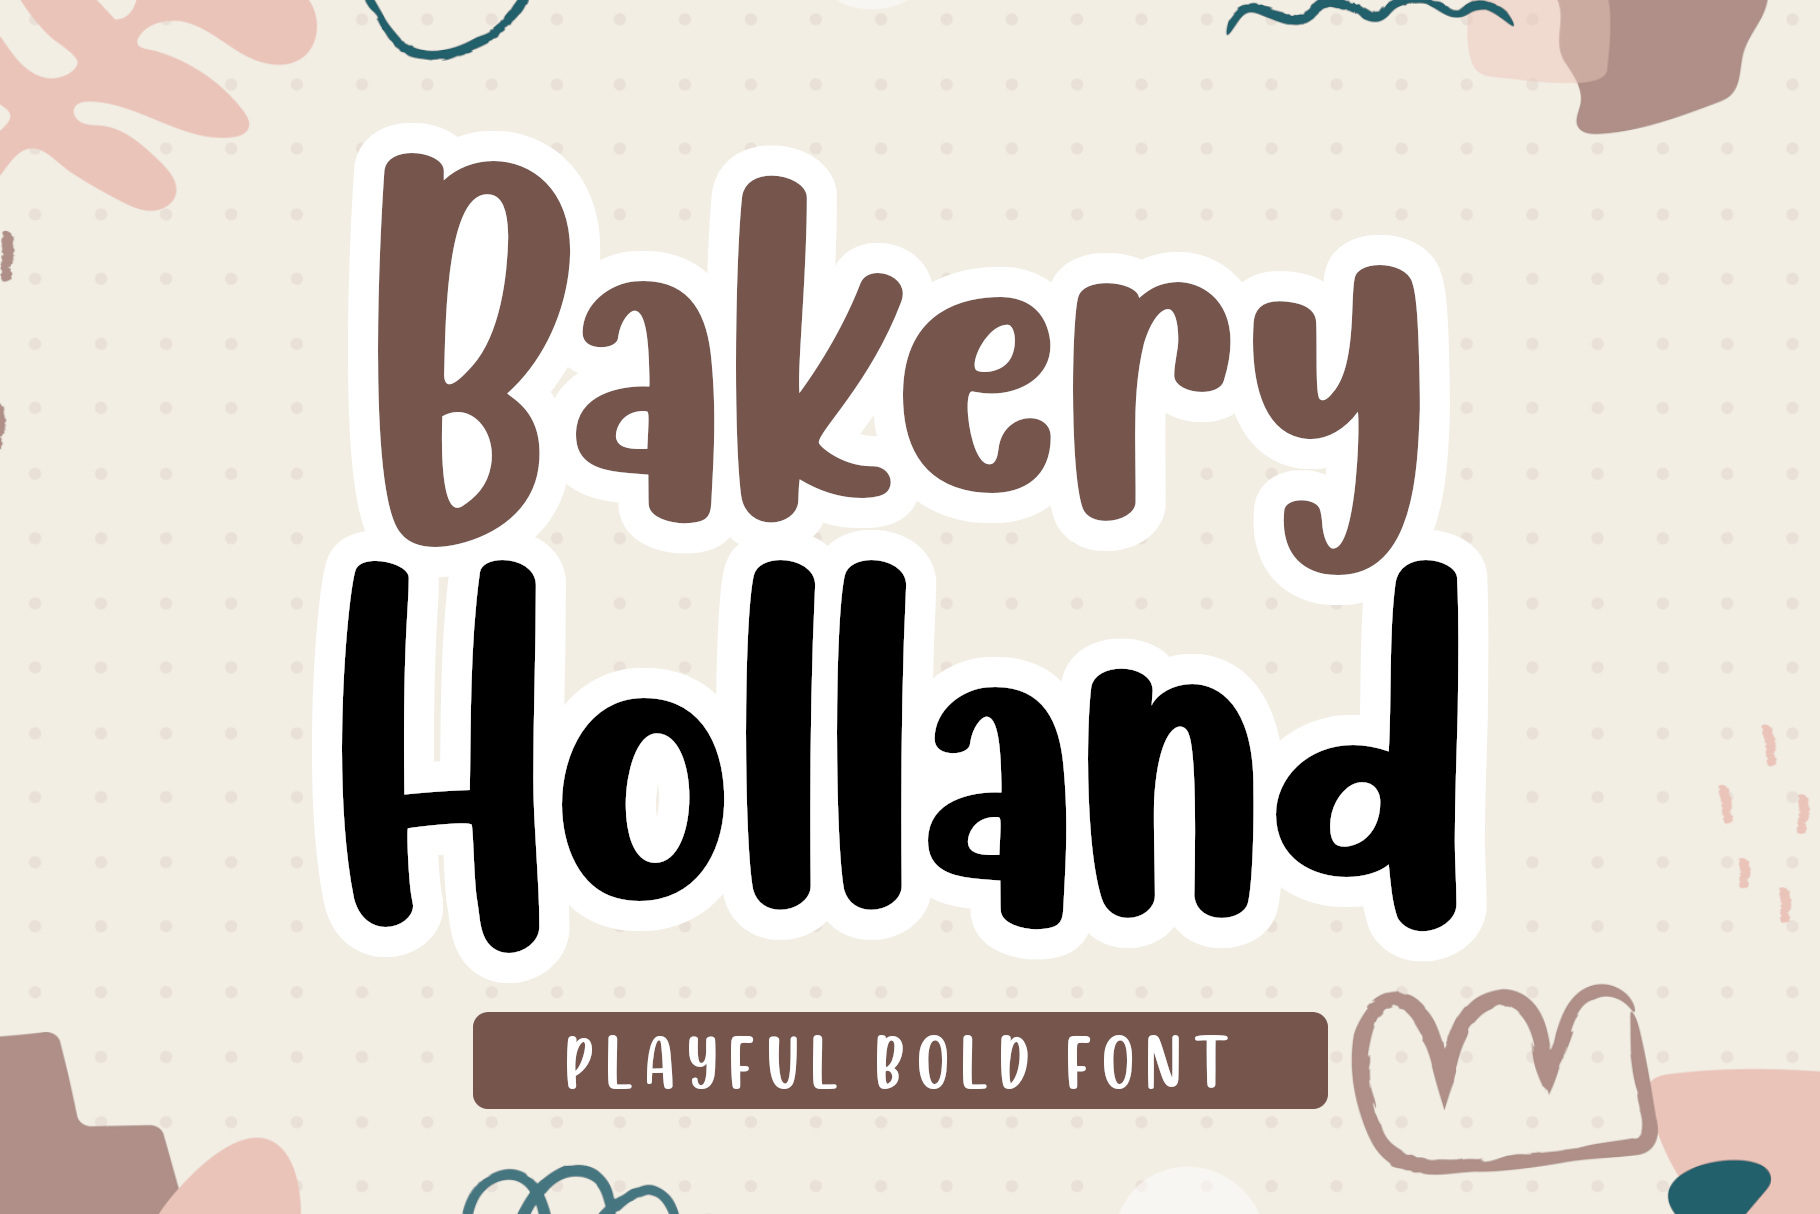 Bakery Holland